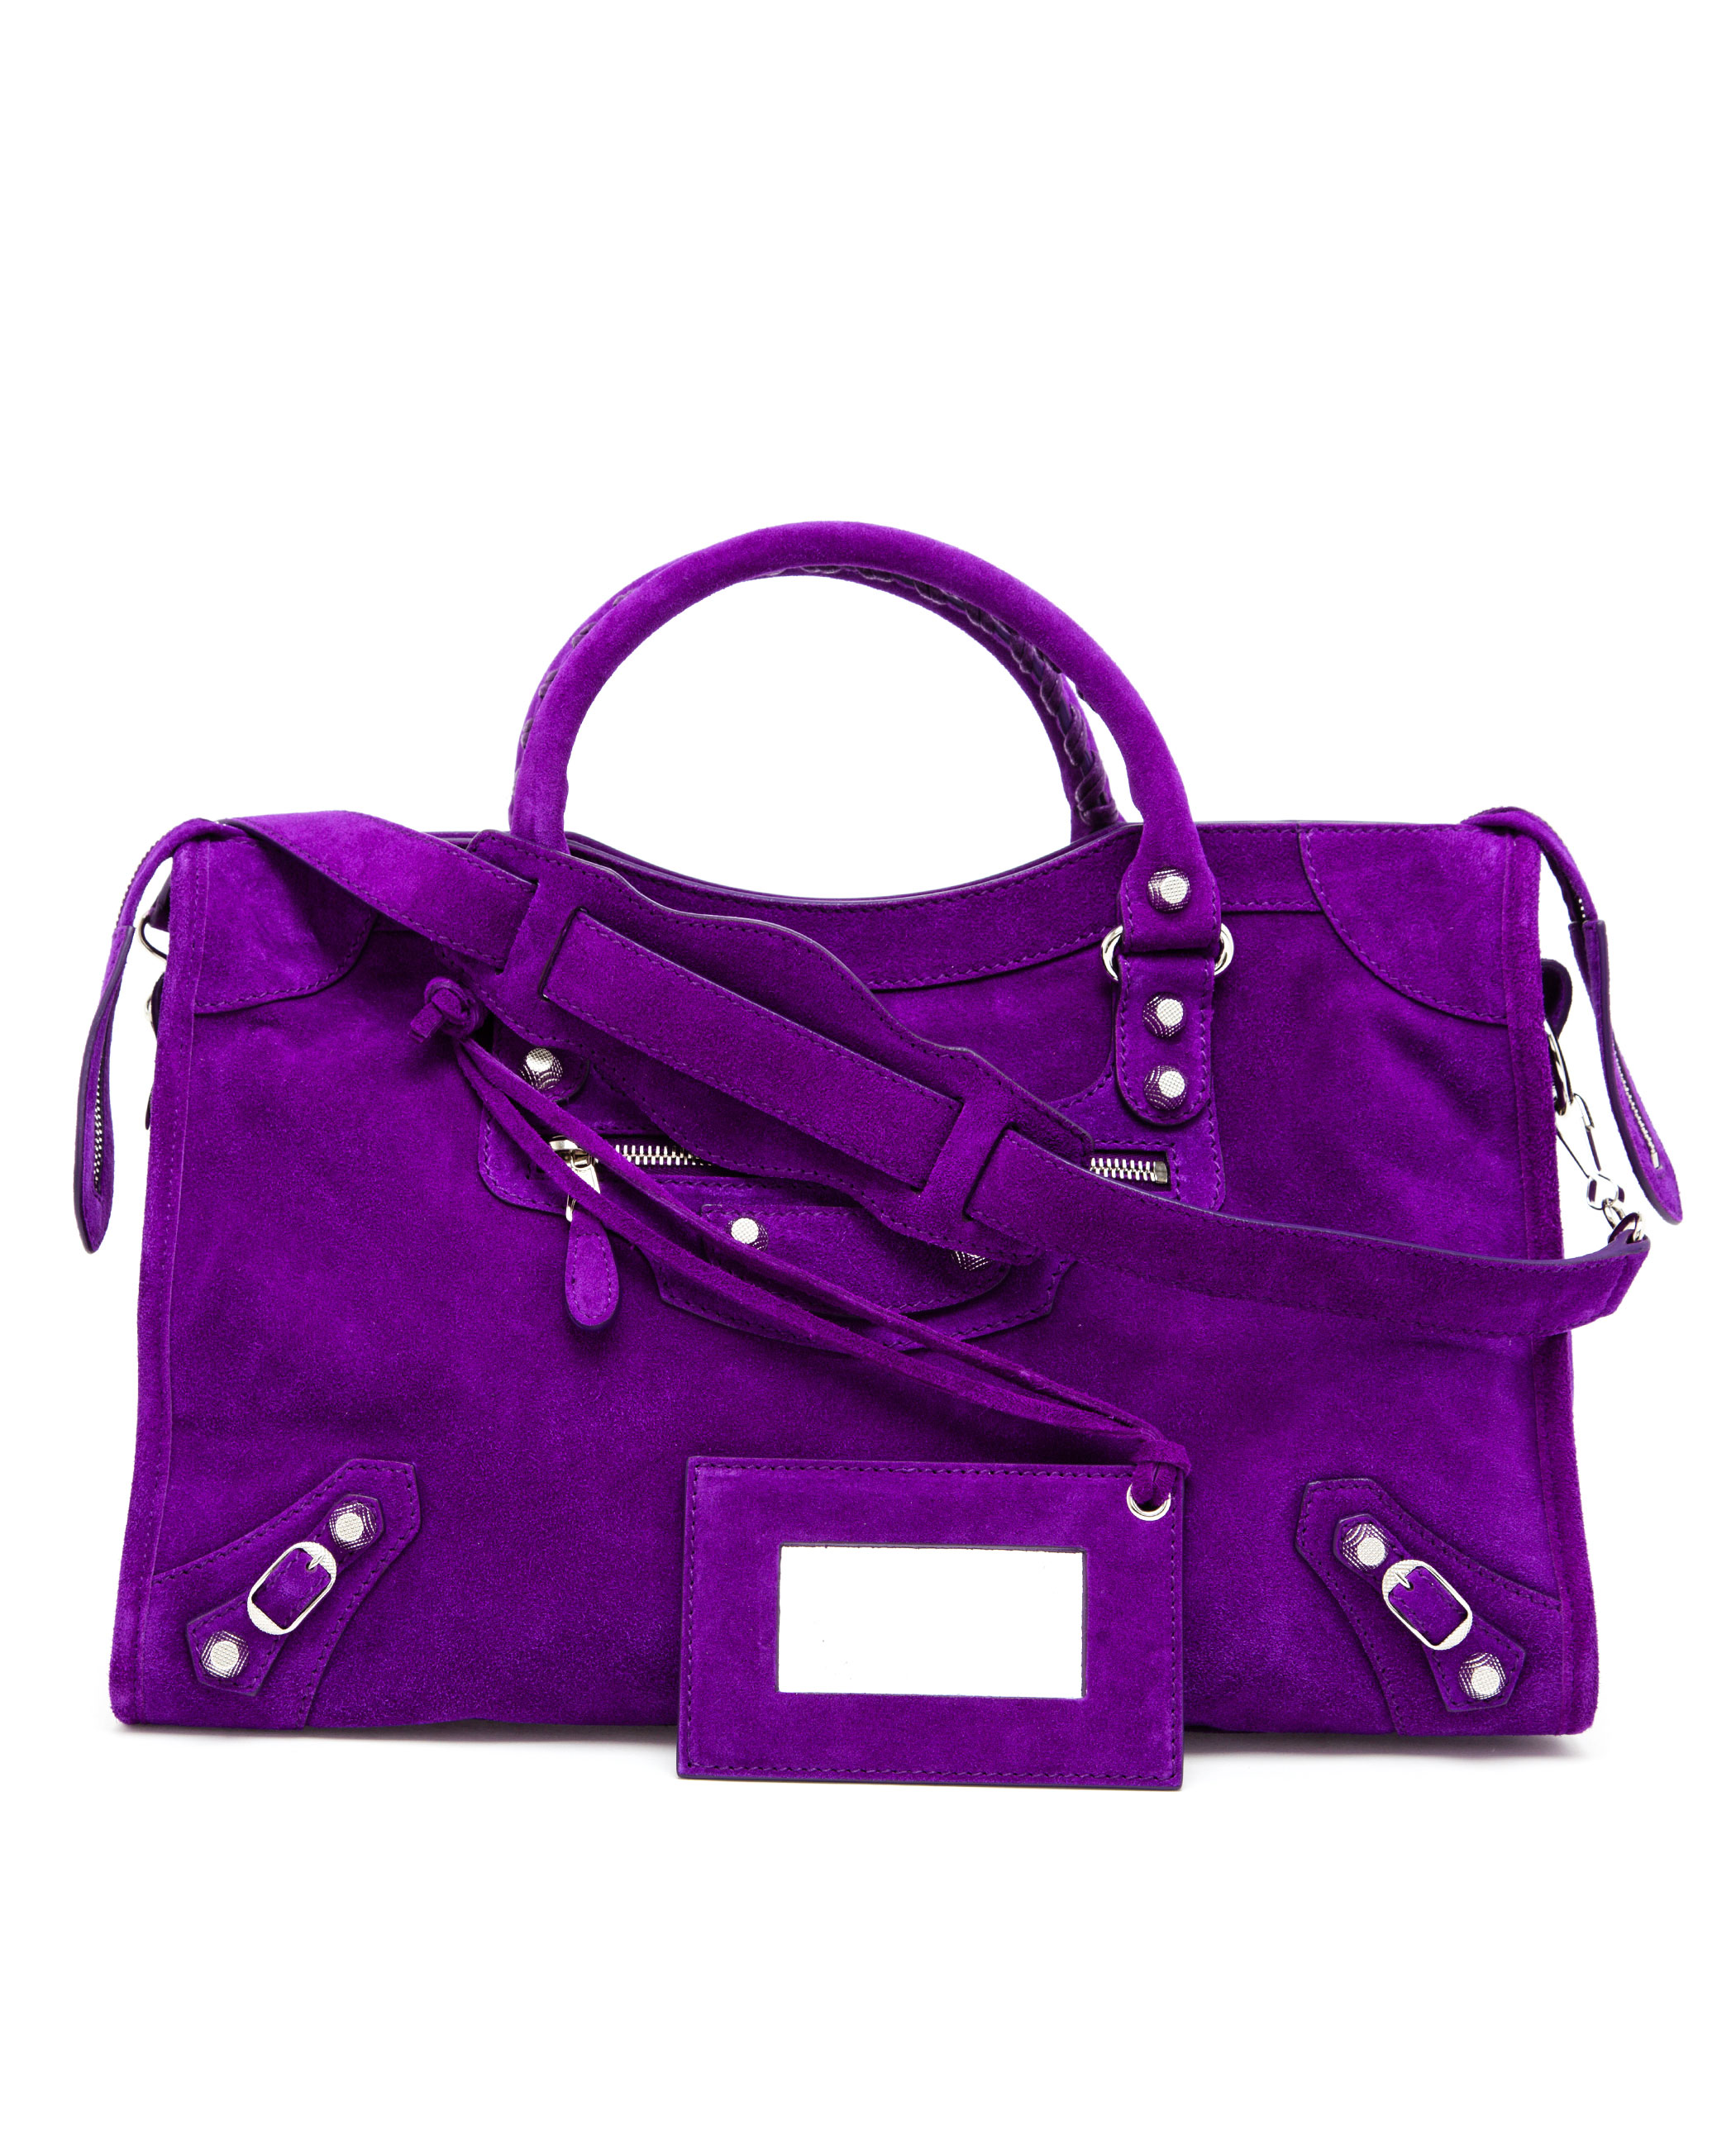 Balenciaga Classic City Suede Bag in Purple | Lyst